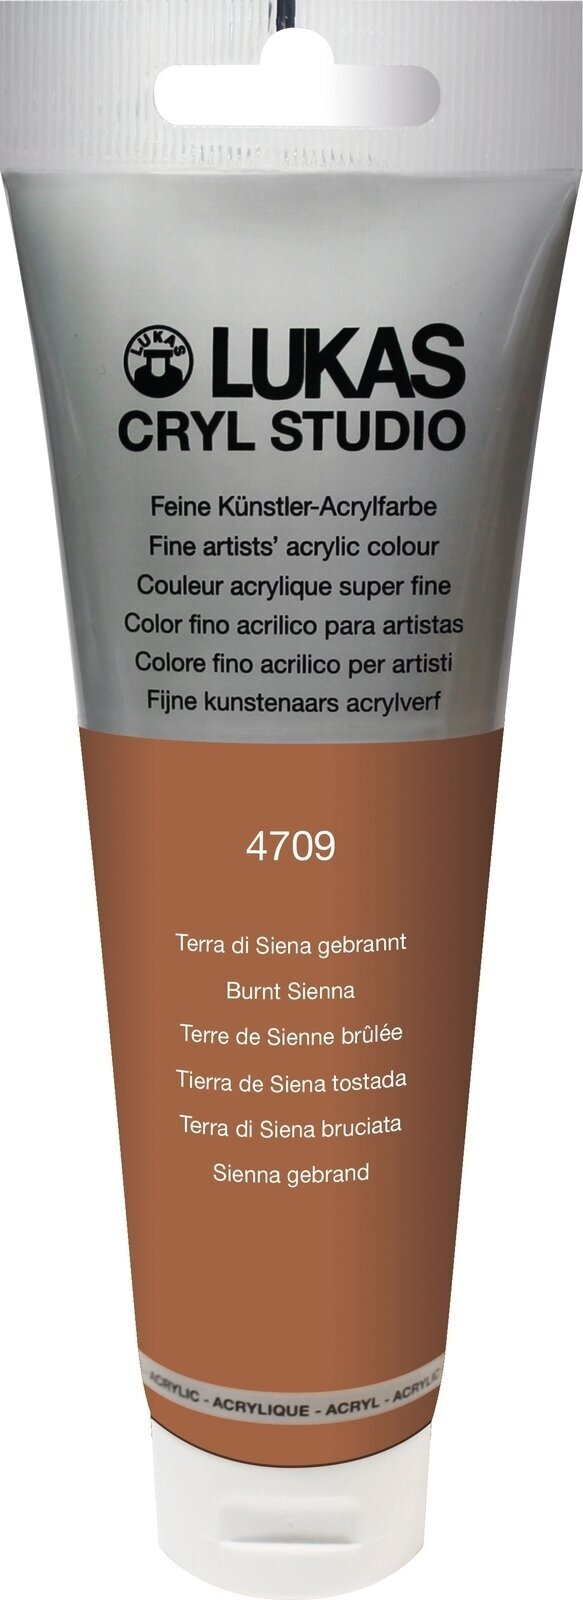 Farba akrylowa Lukas Cryl Studio Acrylic Paint Plastic Tube Farba akrylowa Burnt Sienna 125 ml 1 szt